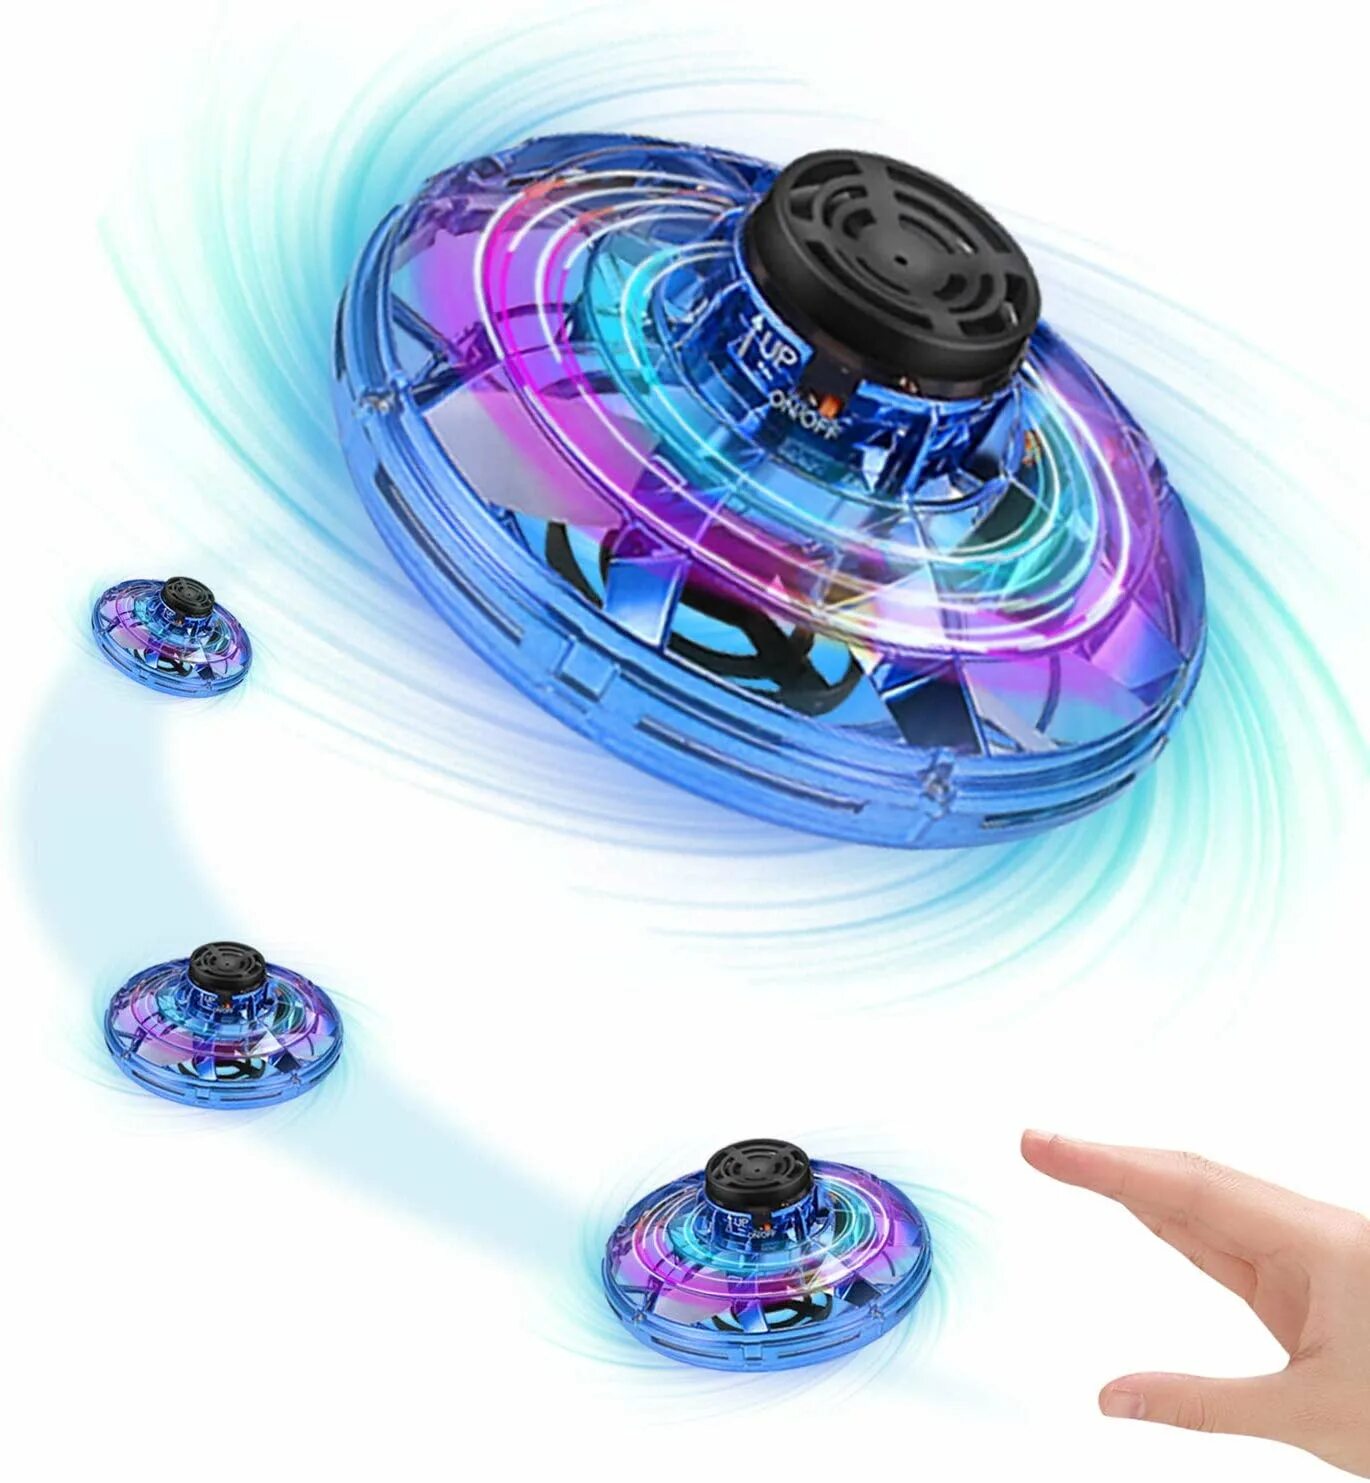 Fly toy. Mini UFO спиннер. Летающий спиннер Бумеранг. Игрушка летающий спиннер НЛО Mini UFO. Mini UFO Haifisch.